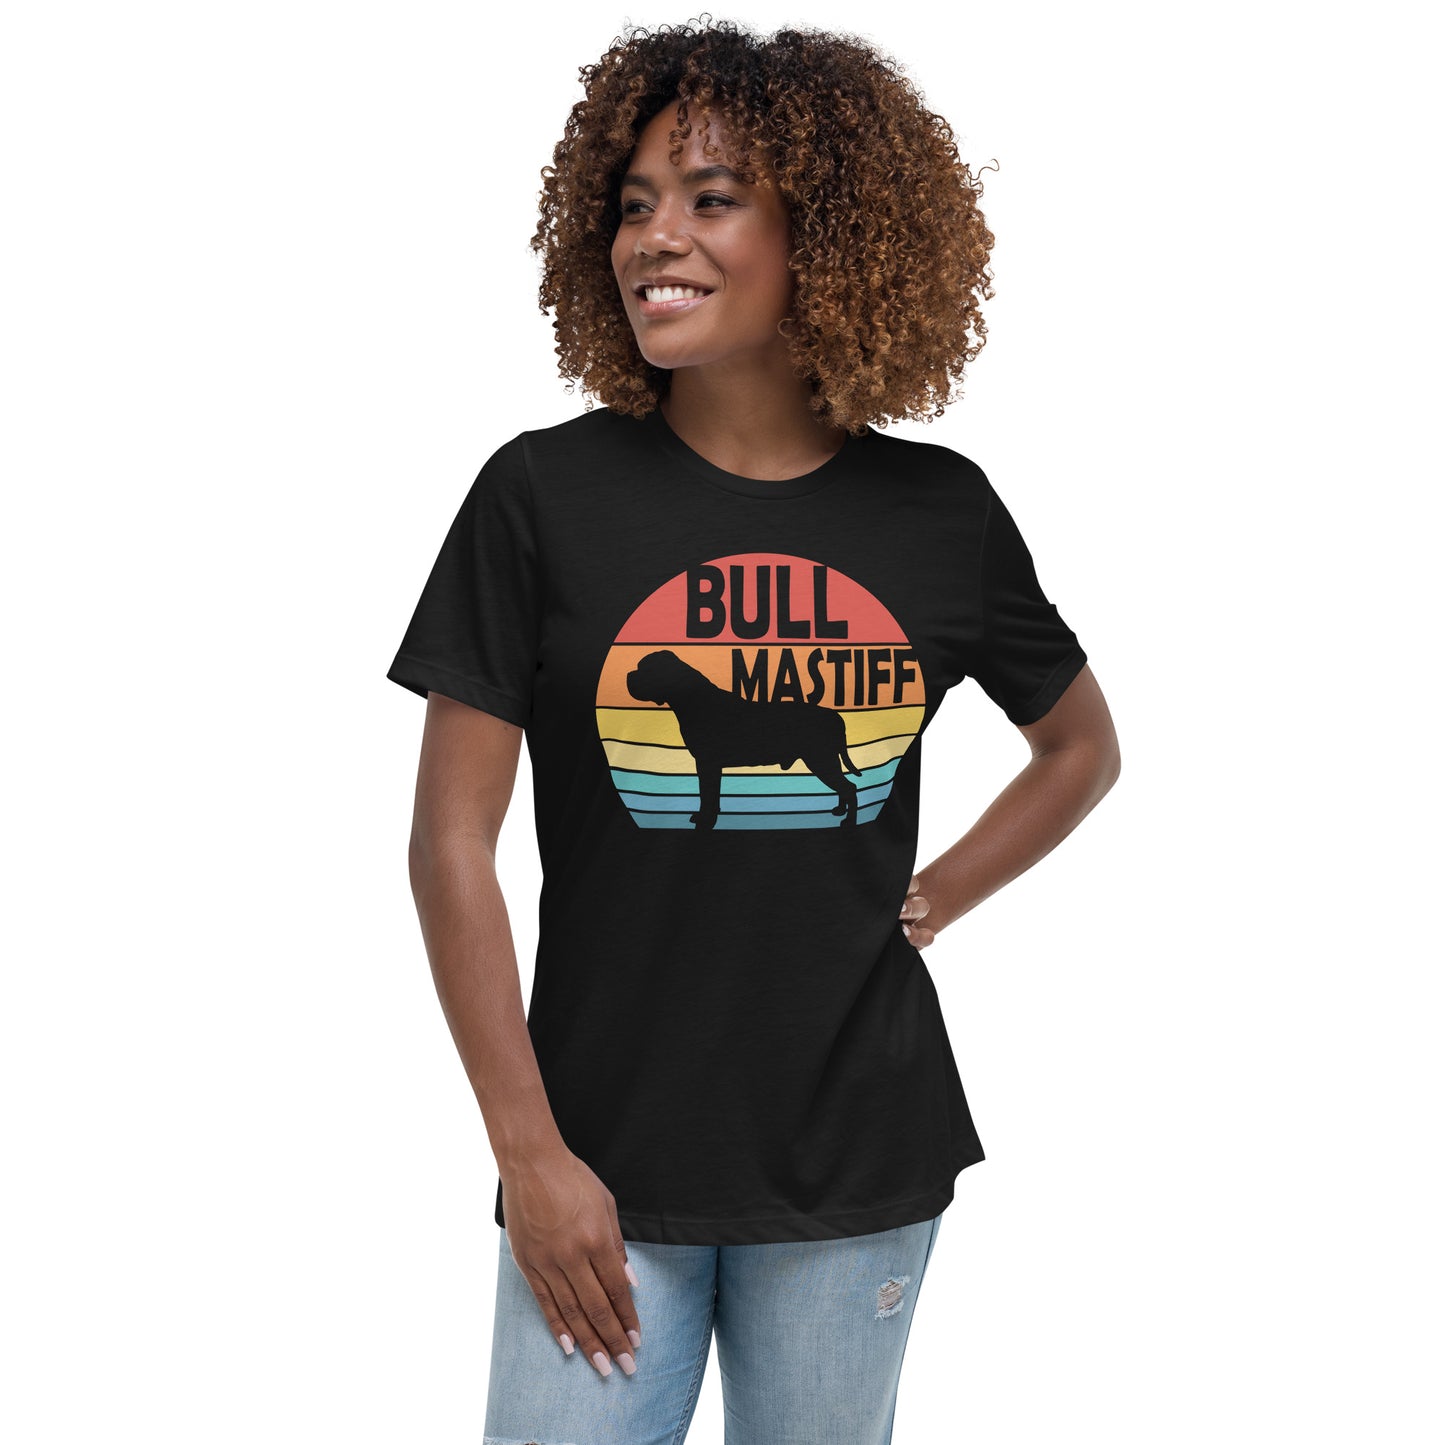 Sunset Bull Mastiff Women's Relaxed T-Shirt